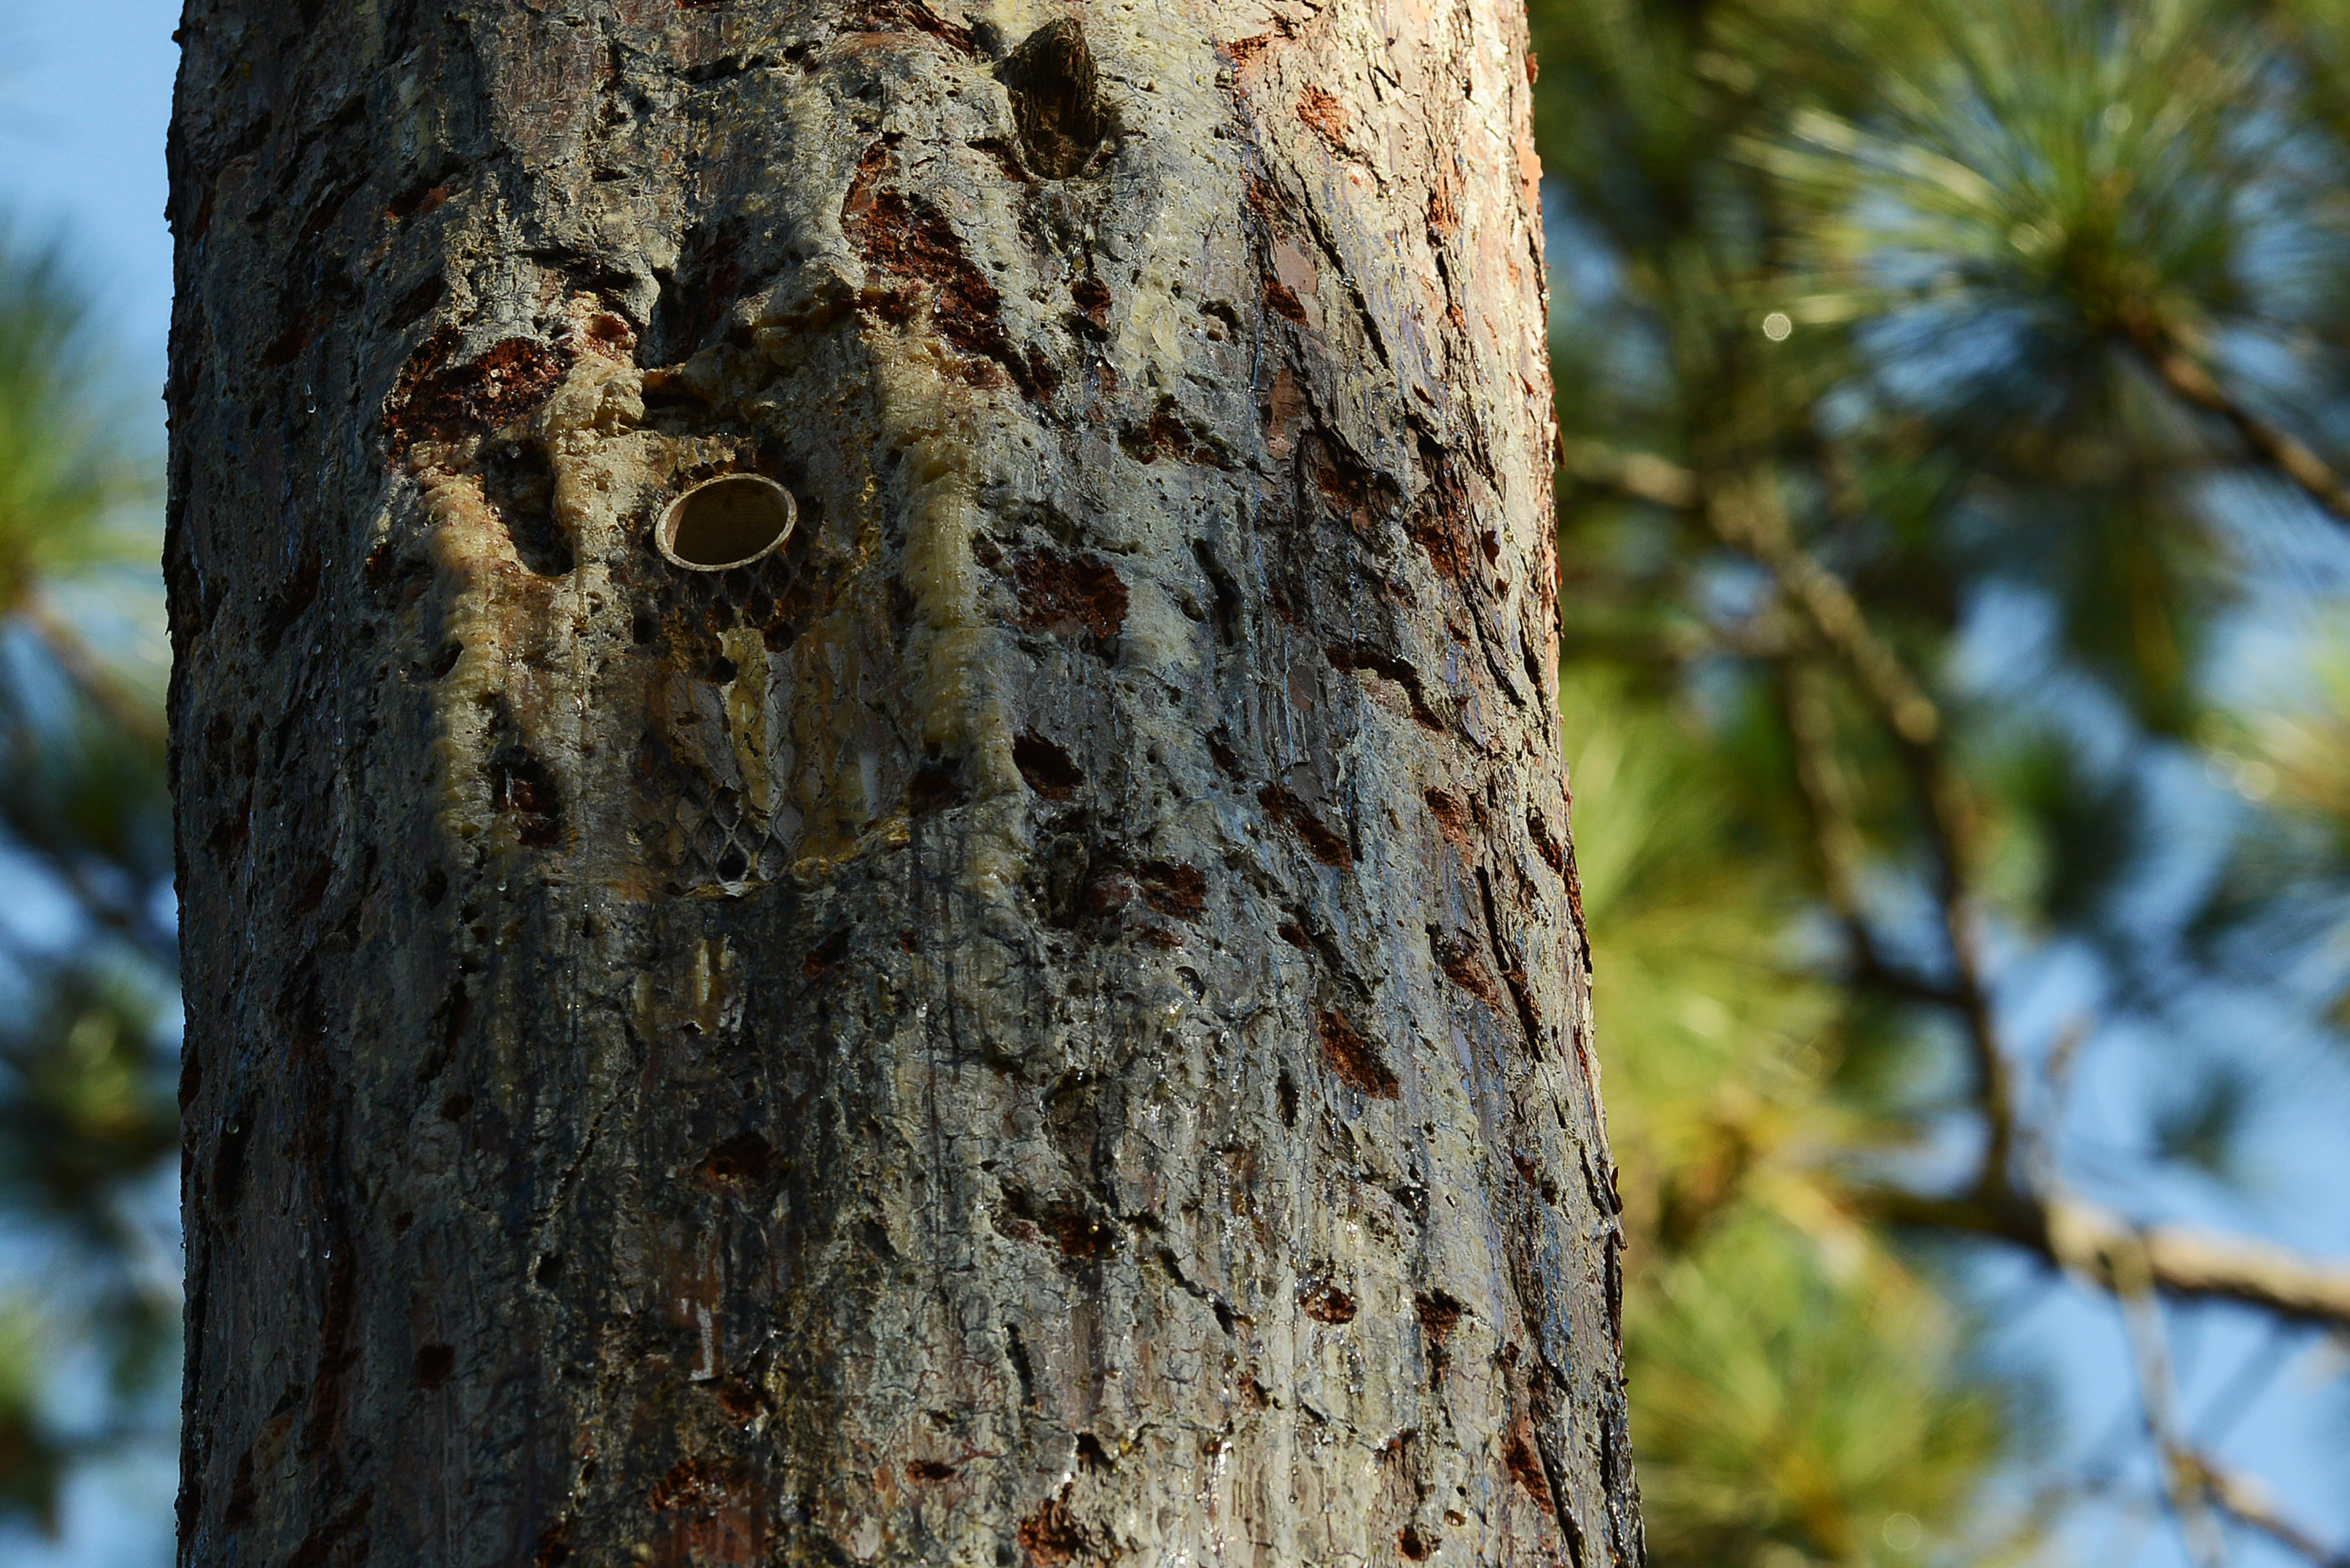 Close-up image of bark on a longleaf pine